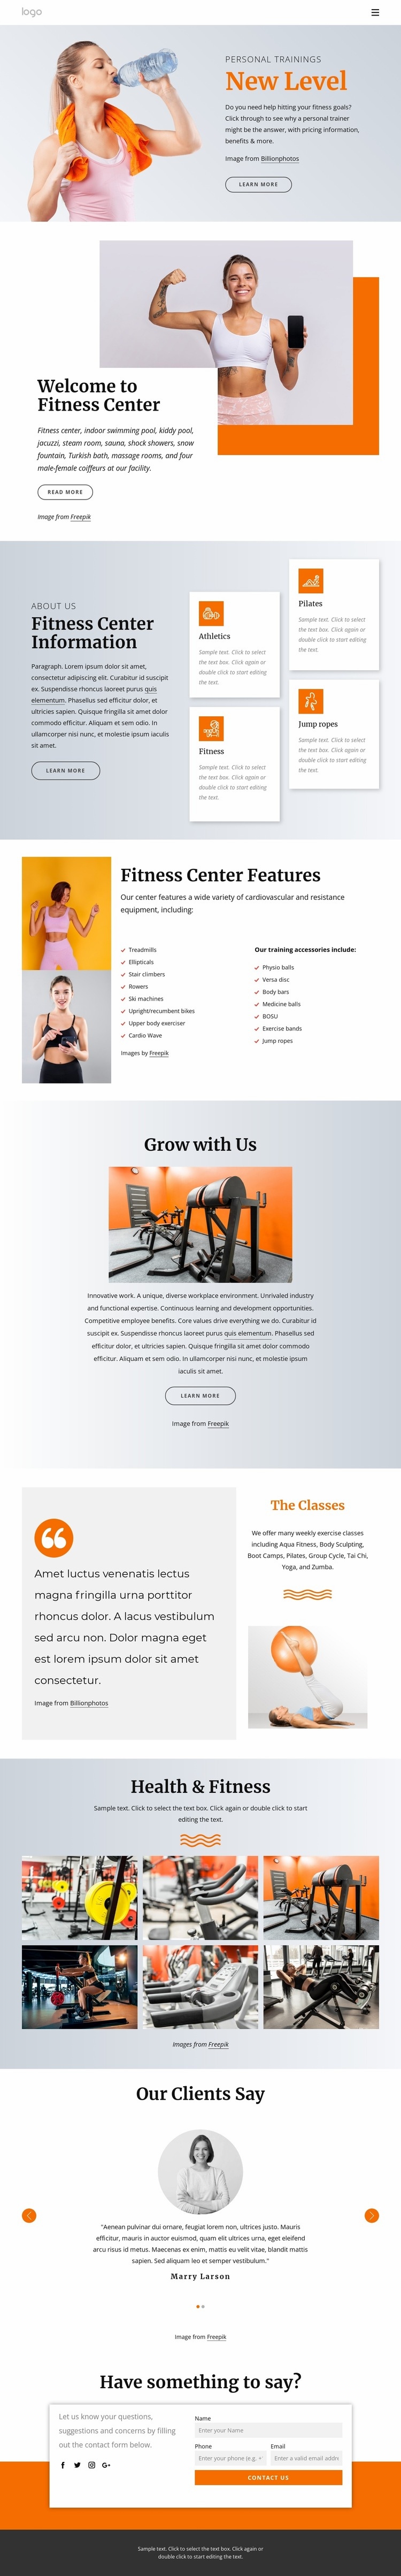 24 hour fitness center Homepage Design